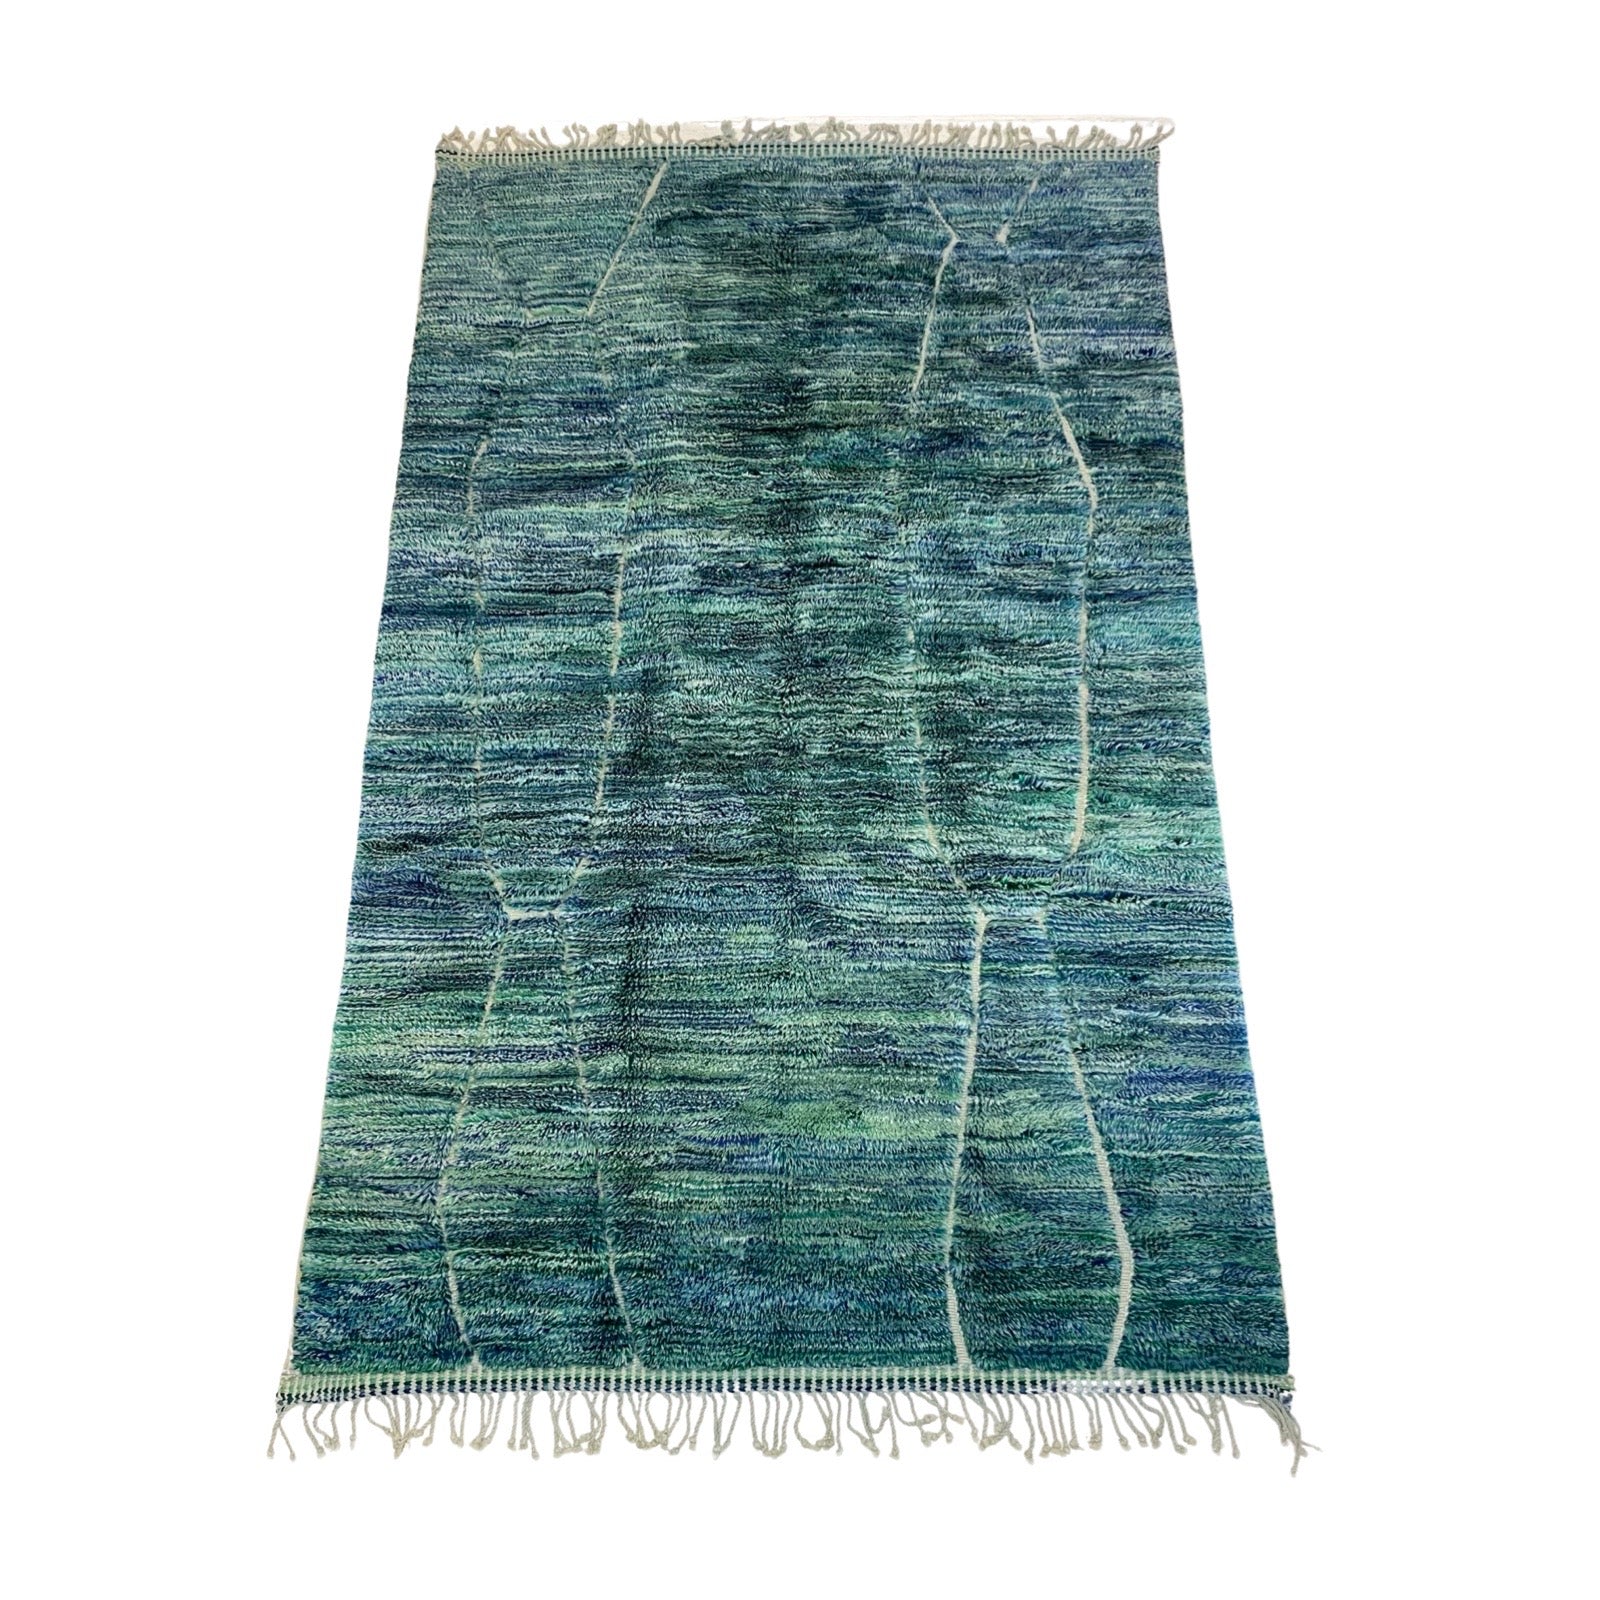 Handwoven green and blue Moroccan Beni Mrirt style rug - Kantara | Moroccan Rugs